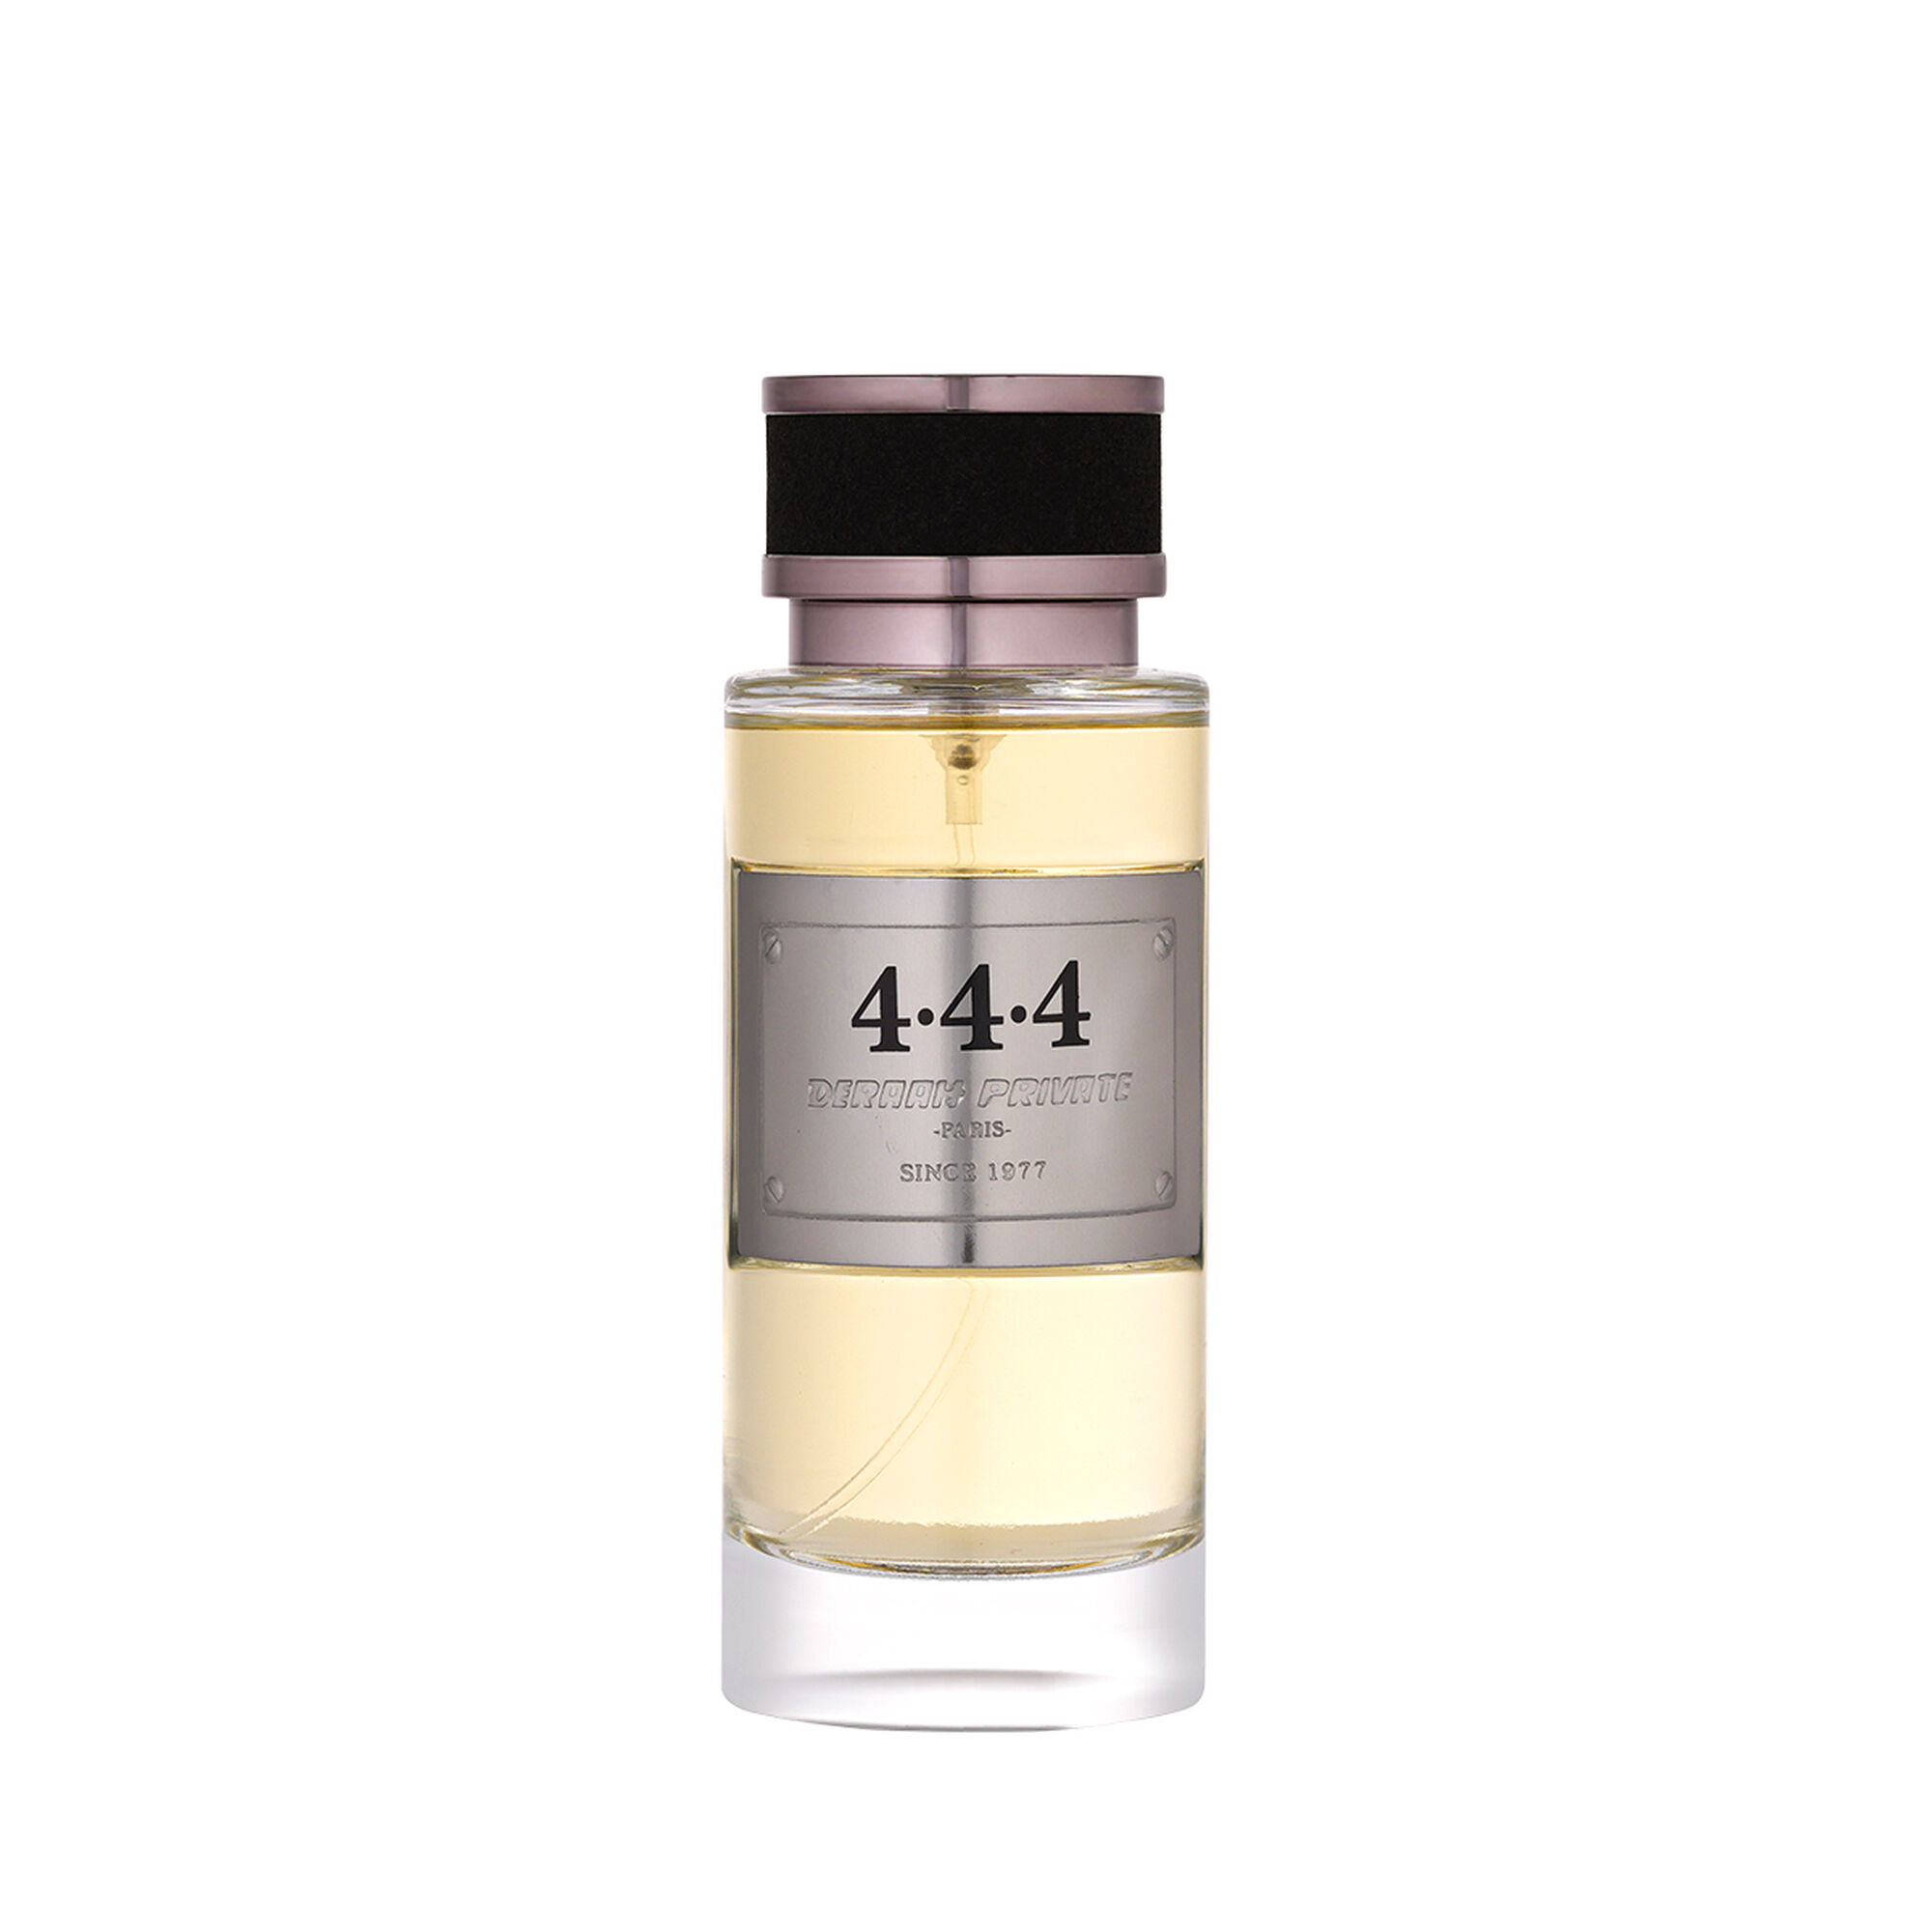 Deraah Private 444 perfume